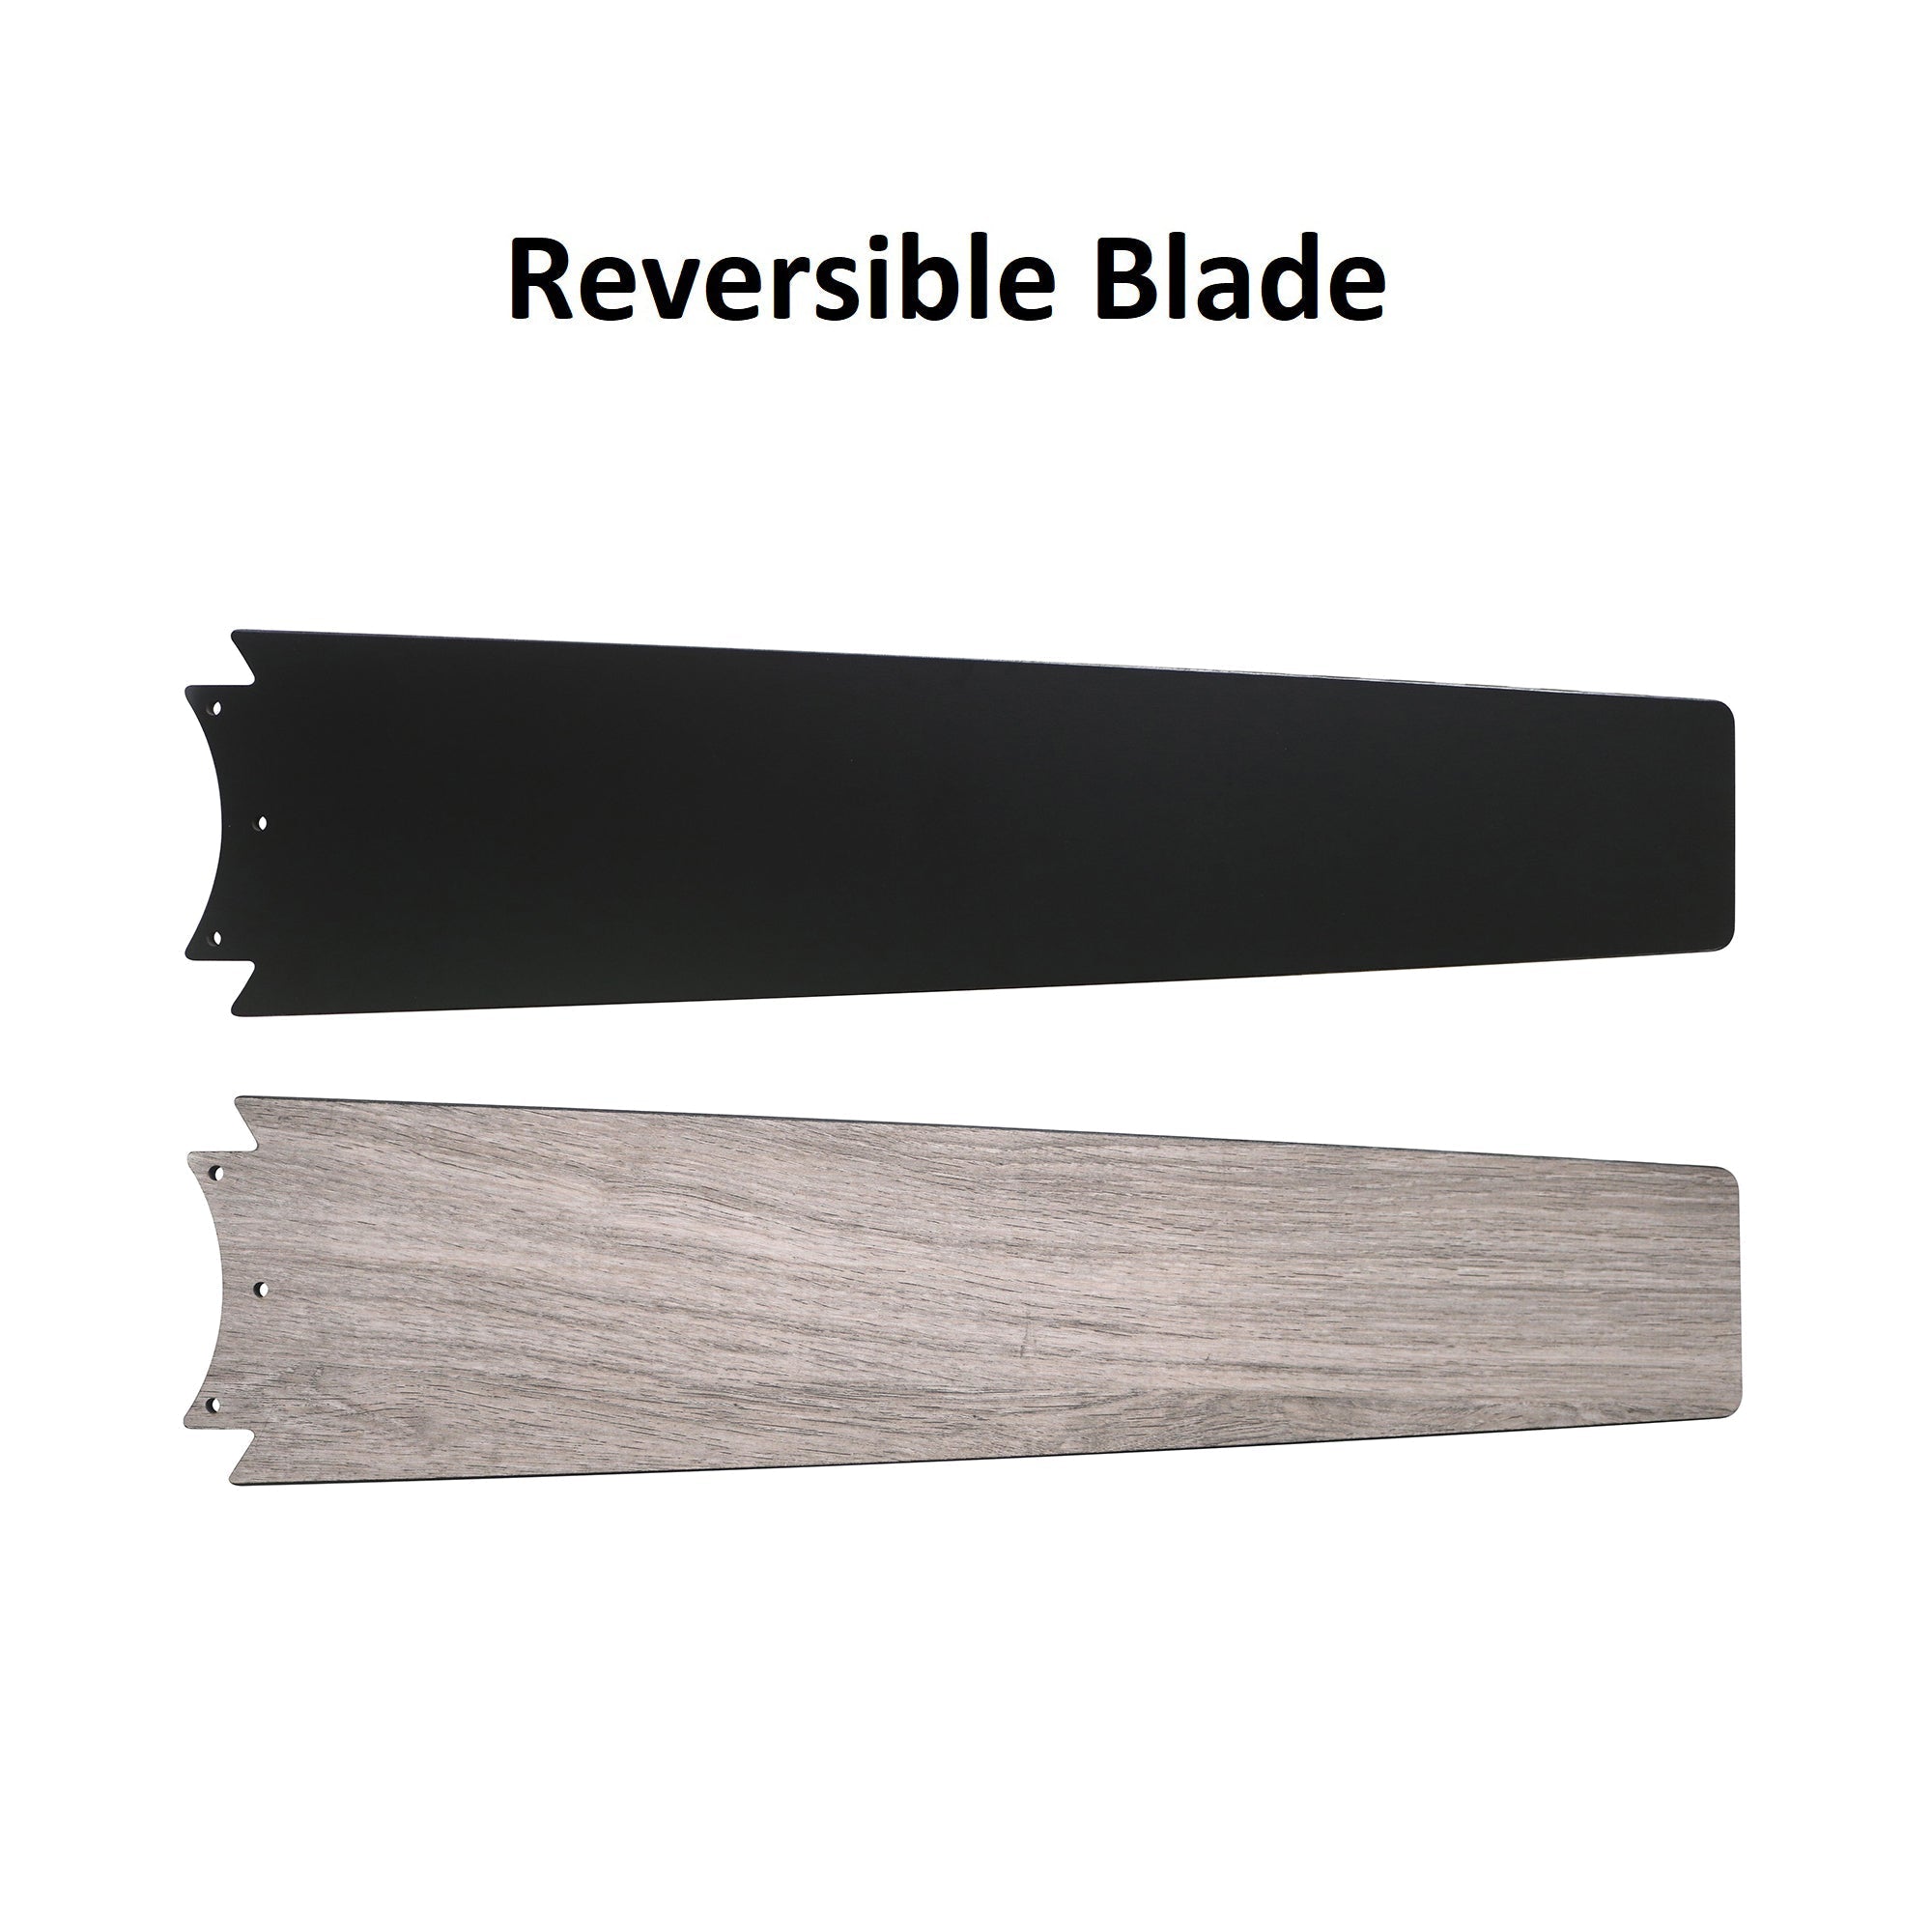 Raiden 52 Inch 3-Blade Best Smart Ceiling Fan With Led Light Kit & Best Smart Wall Switch - Silver/Black & Light Wood (Reversible Blades)